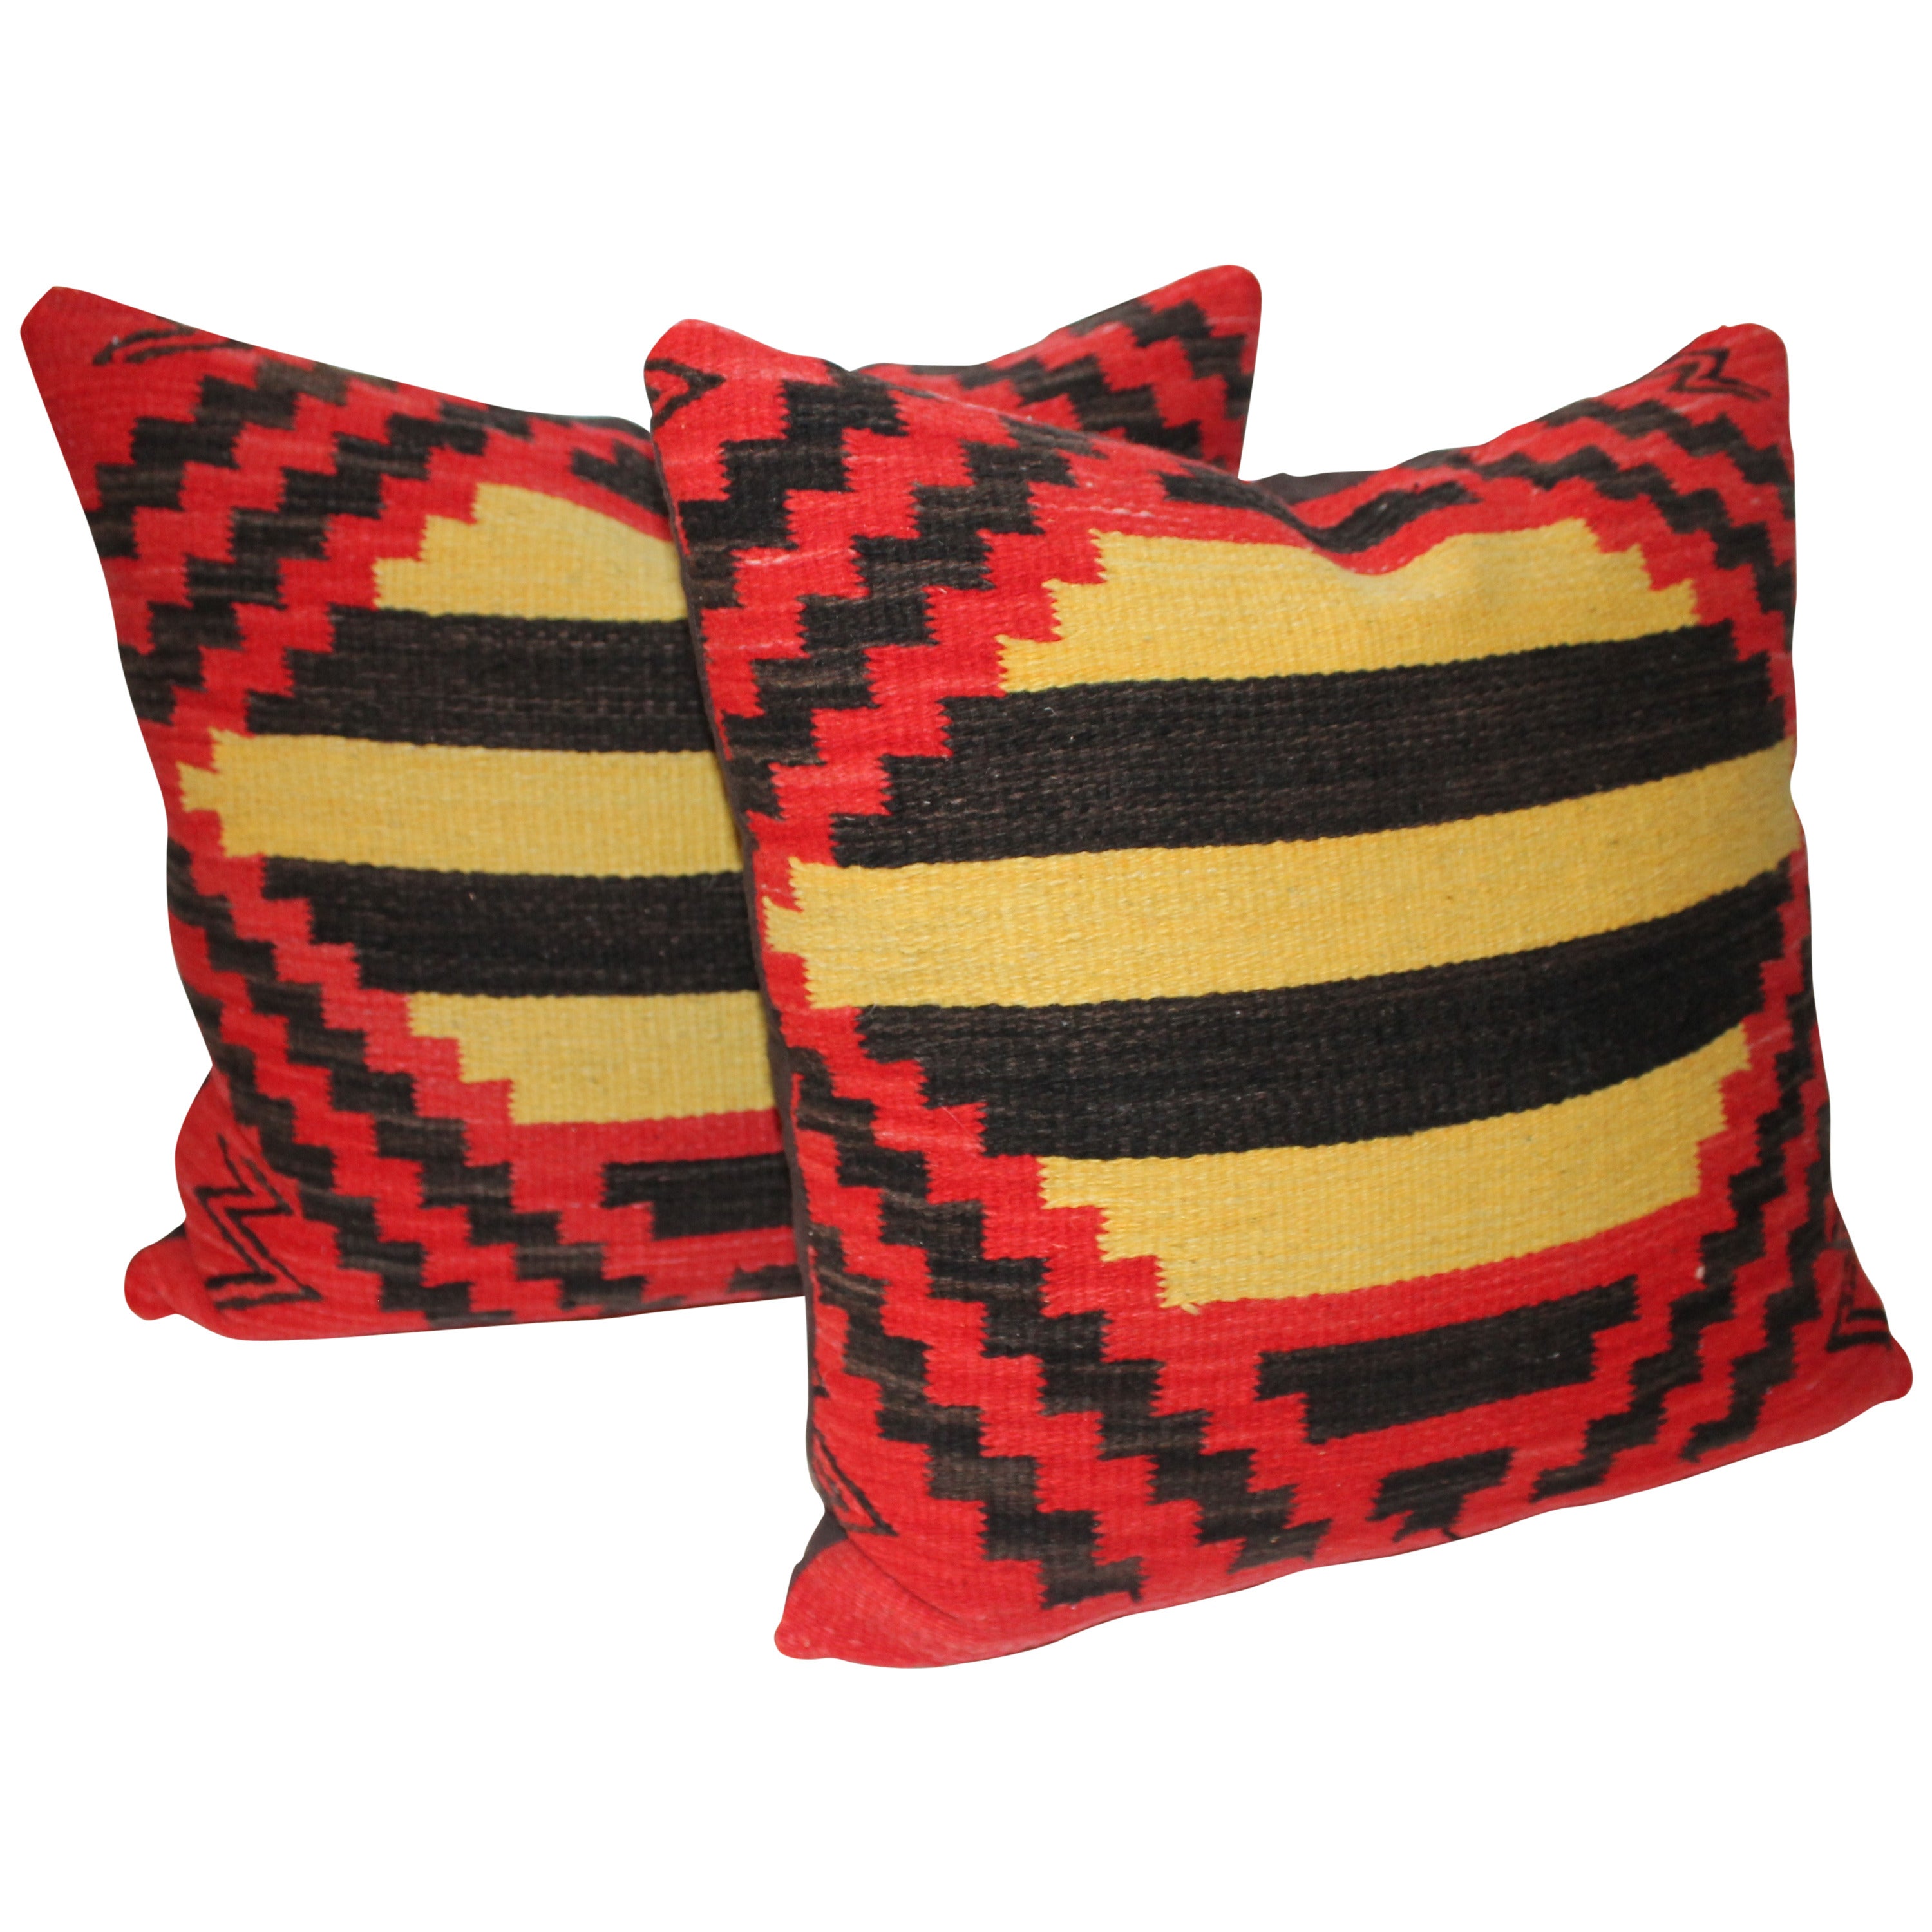 Pair of Geometric Navajo Indian Weaving Pillows